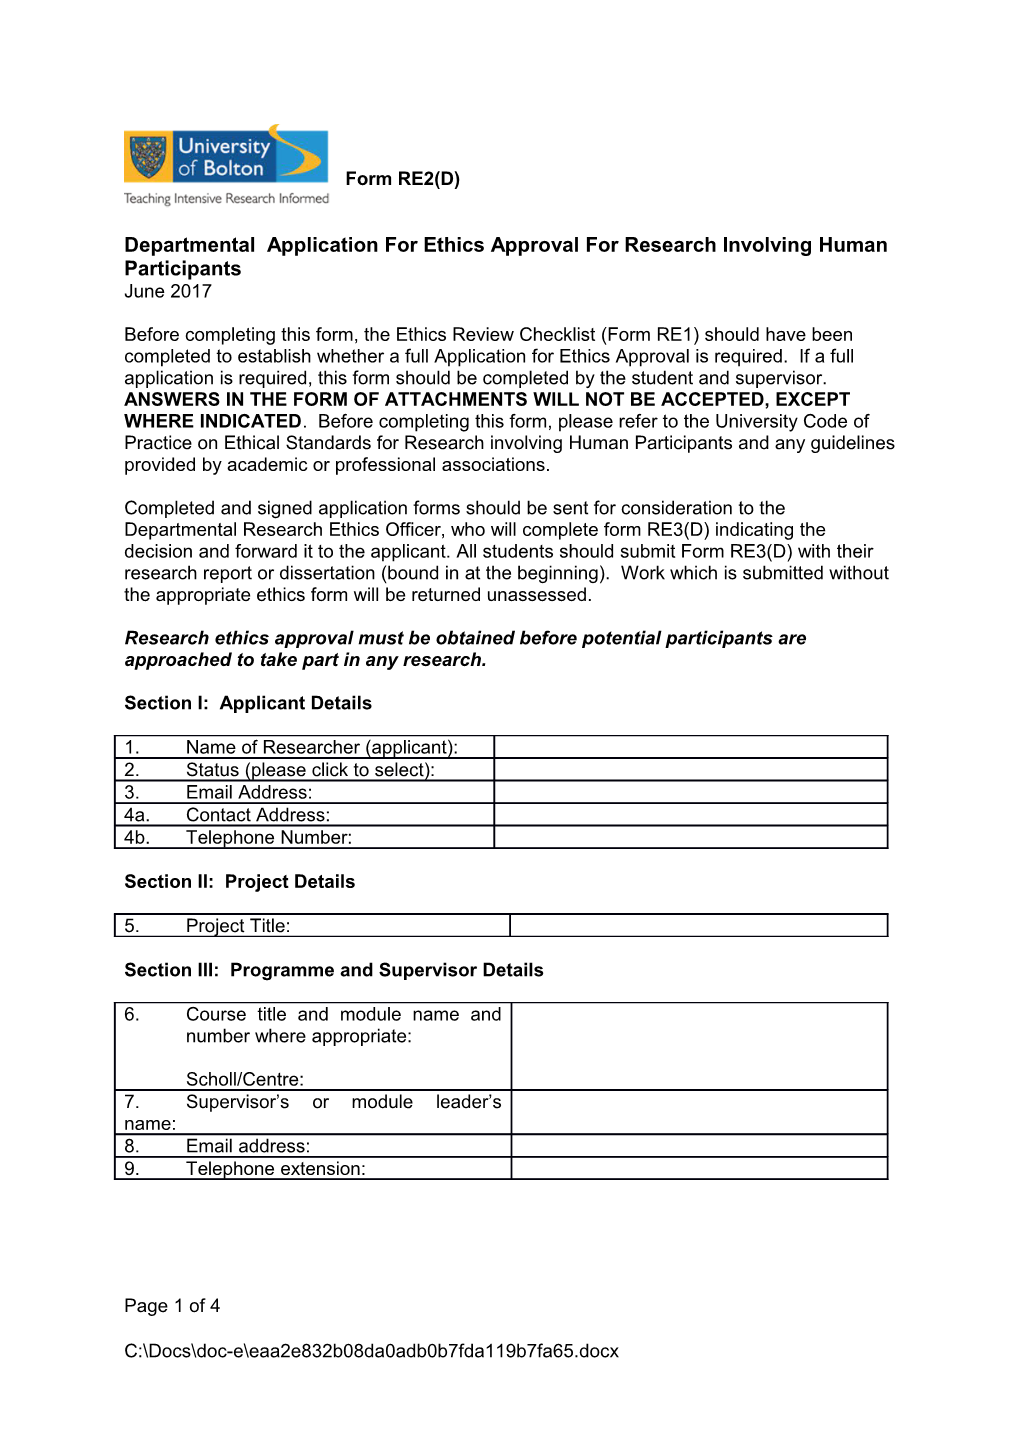 RE(2)D Dept Application for Ethics Approval Form Jun 2017